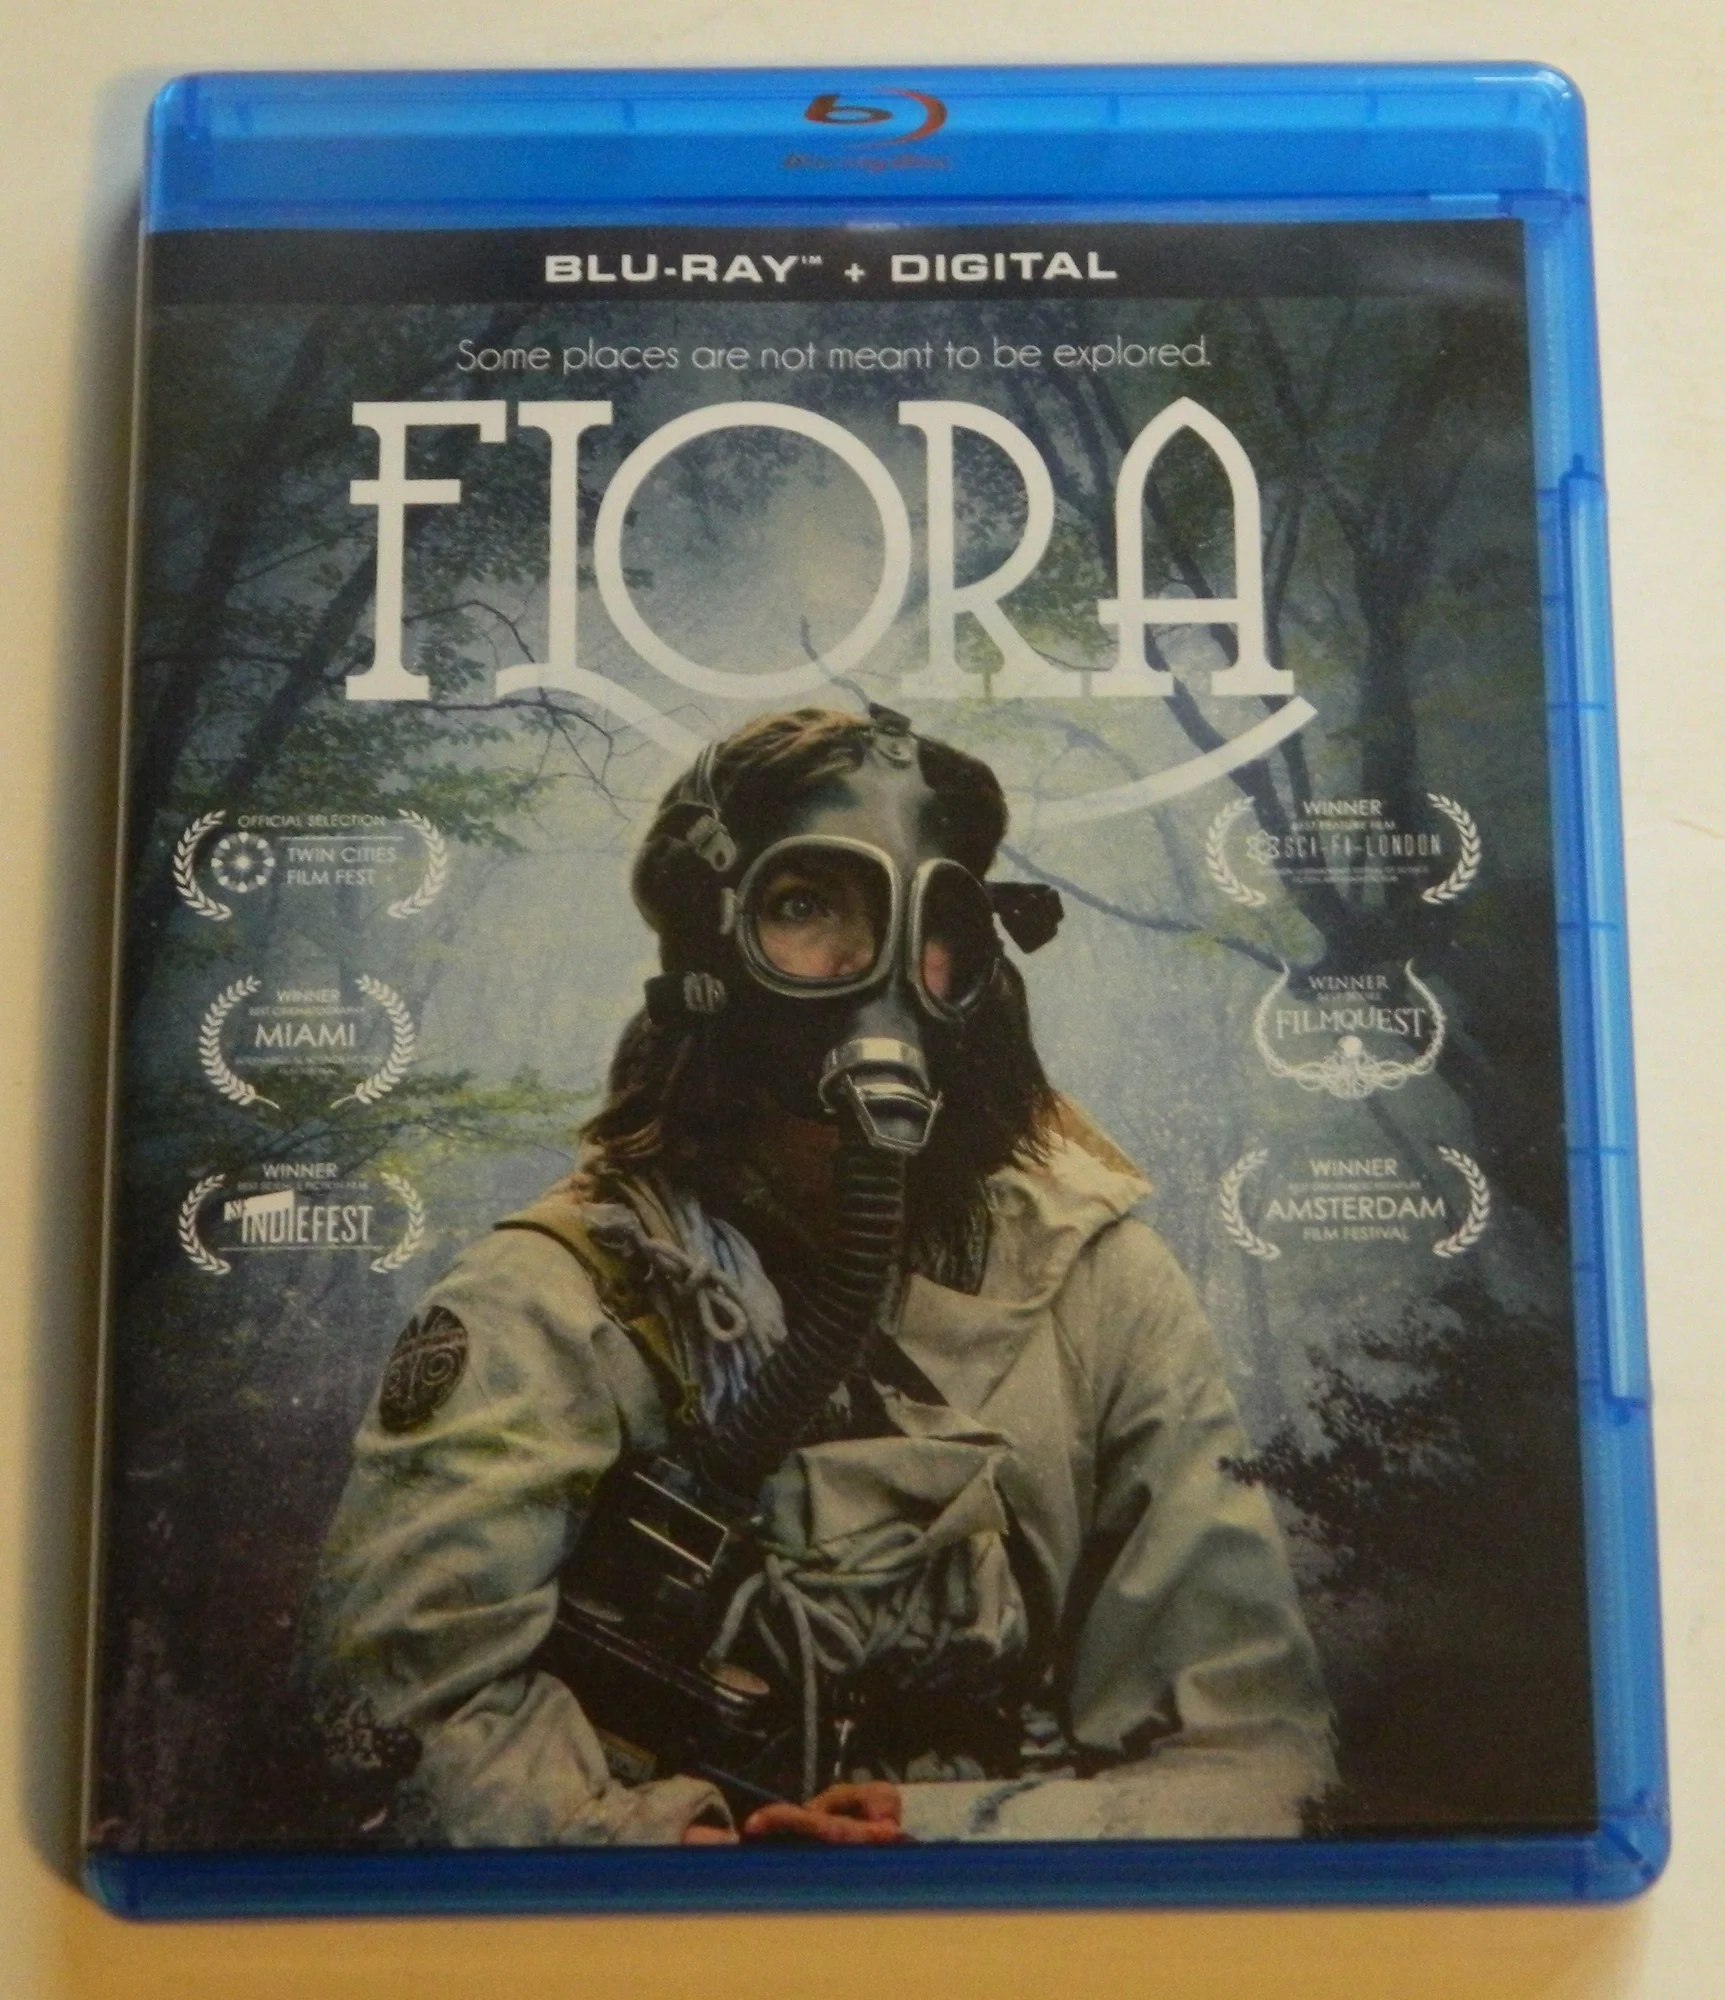 Flora Blu-Ray